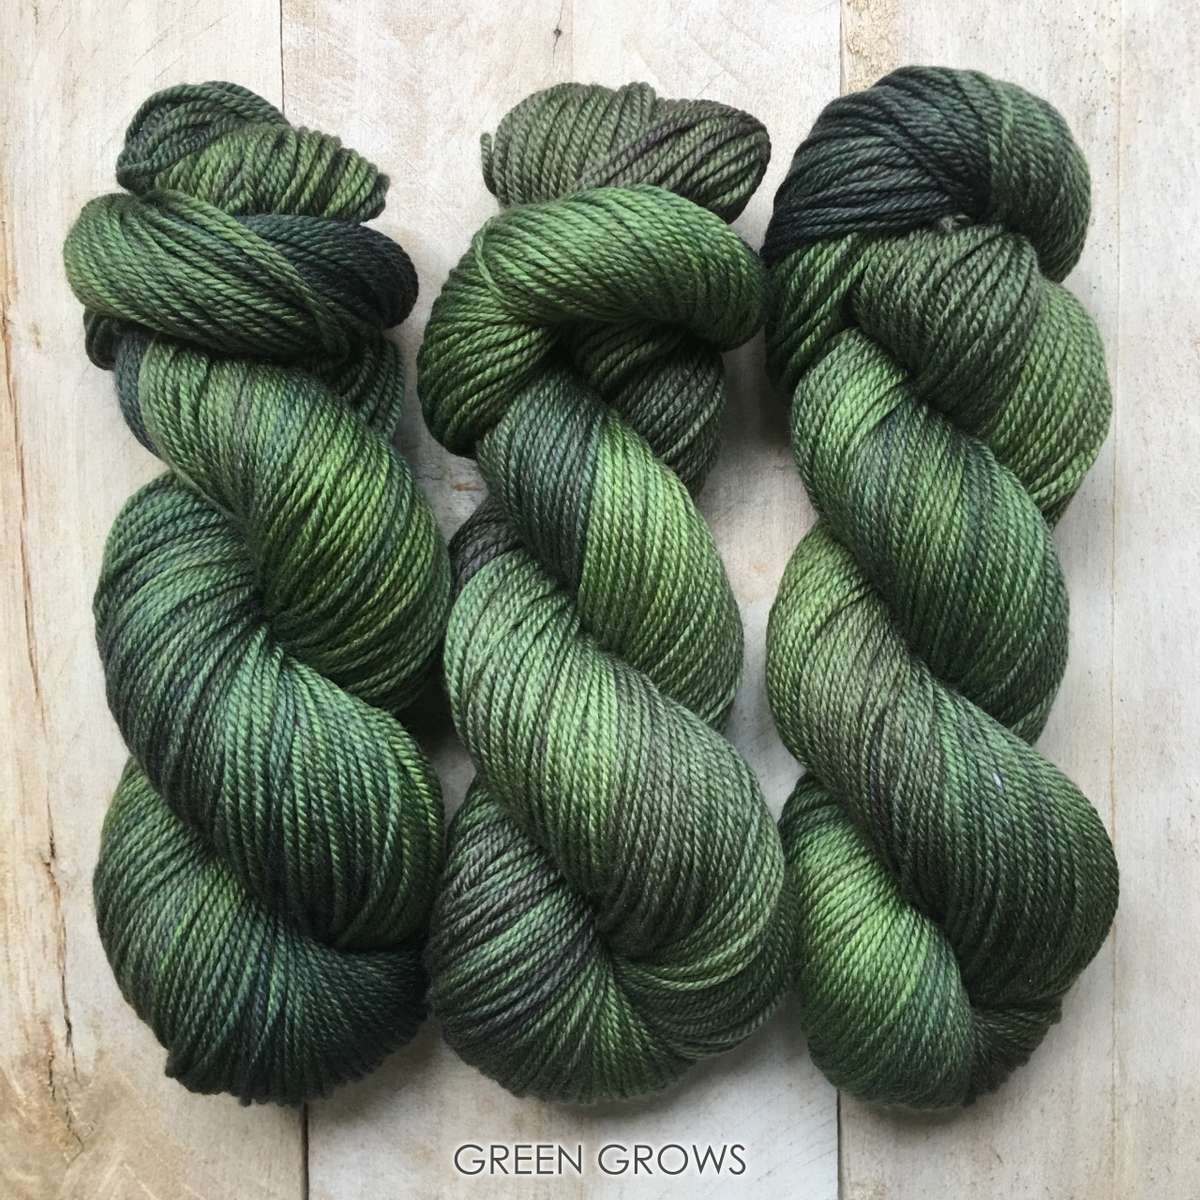 Hand-dyed yarn Louise Robert Green grows